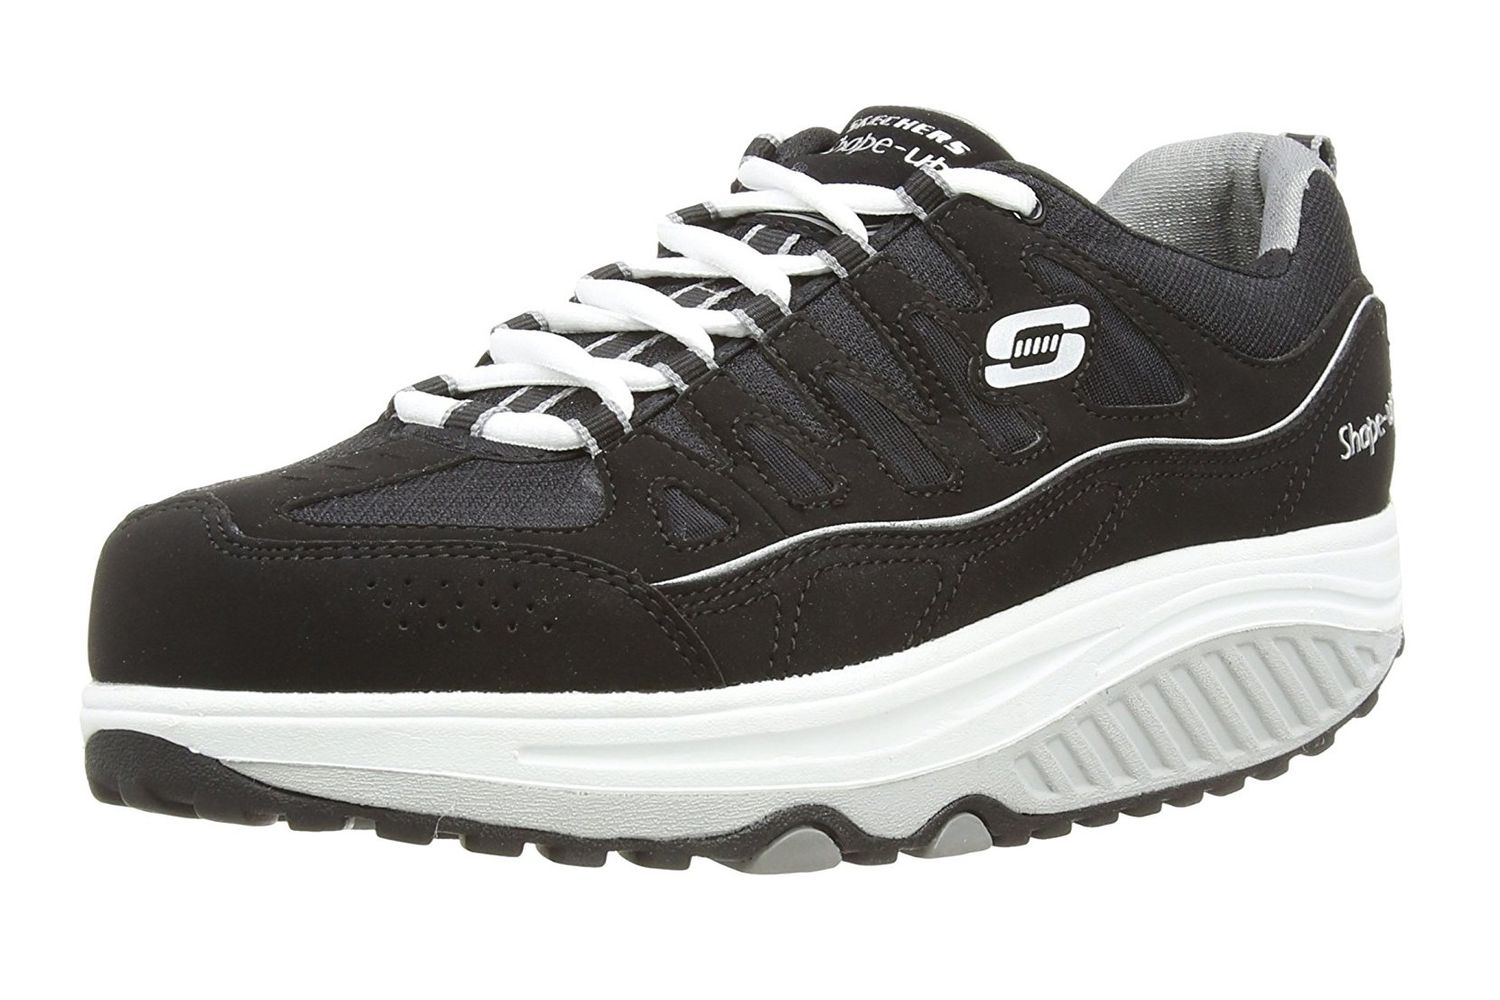 Skechers Shape-Ups 2.0 Comfort Walking Shoes